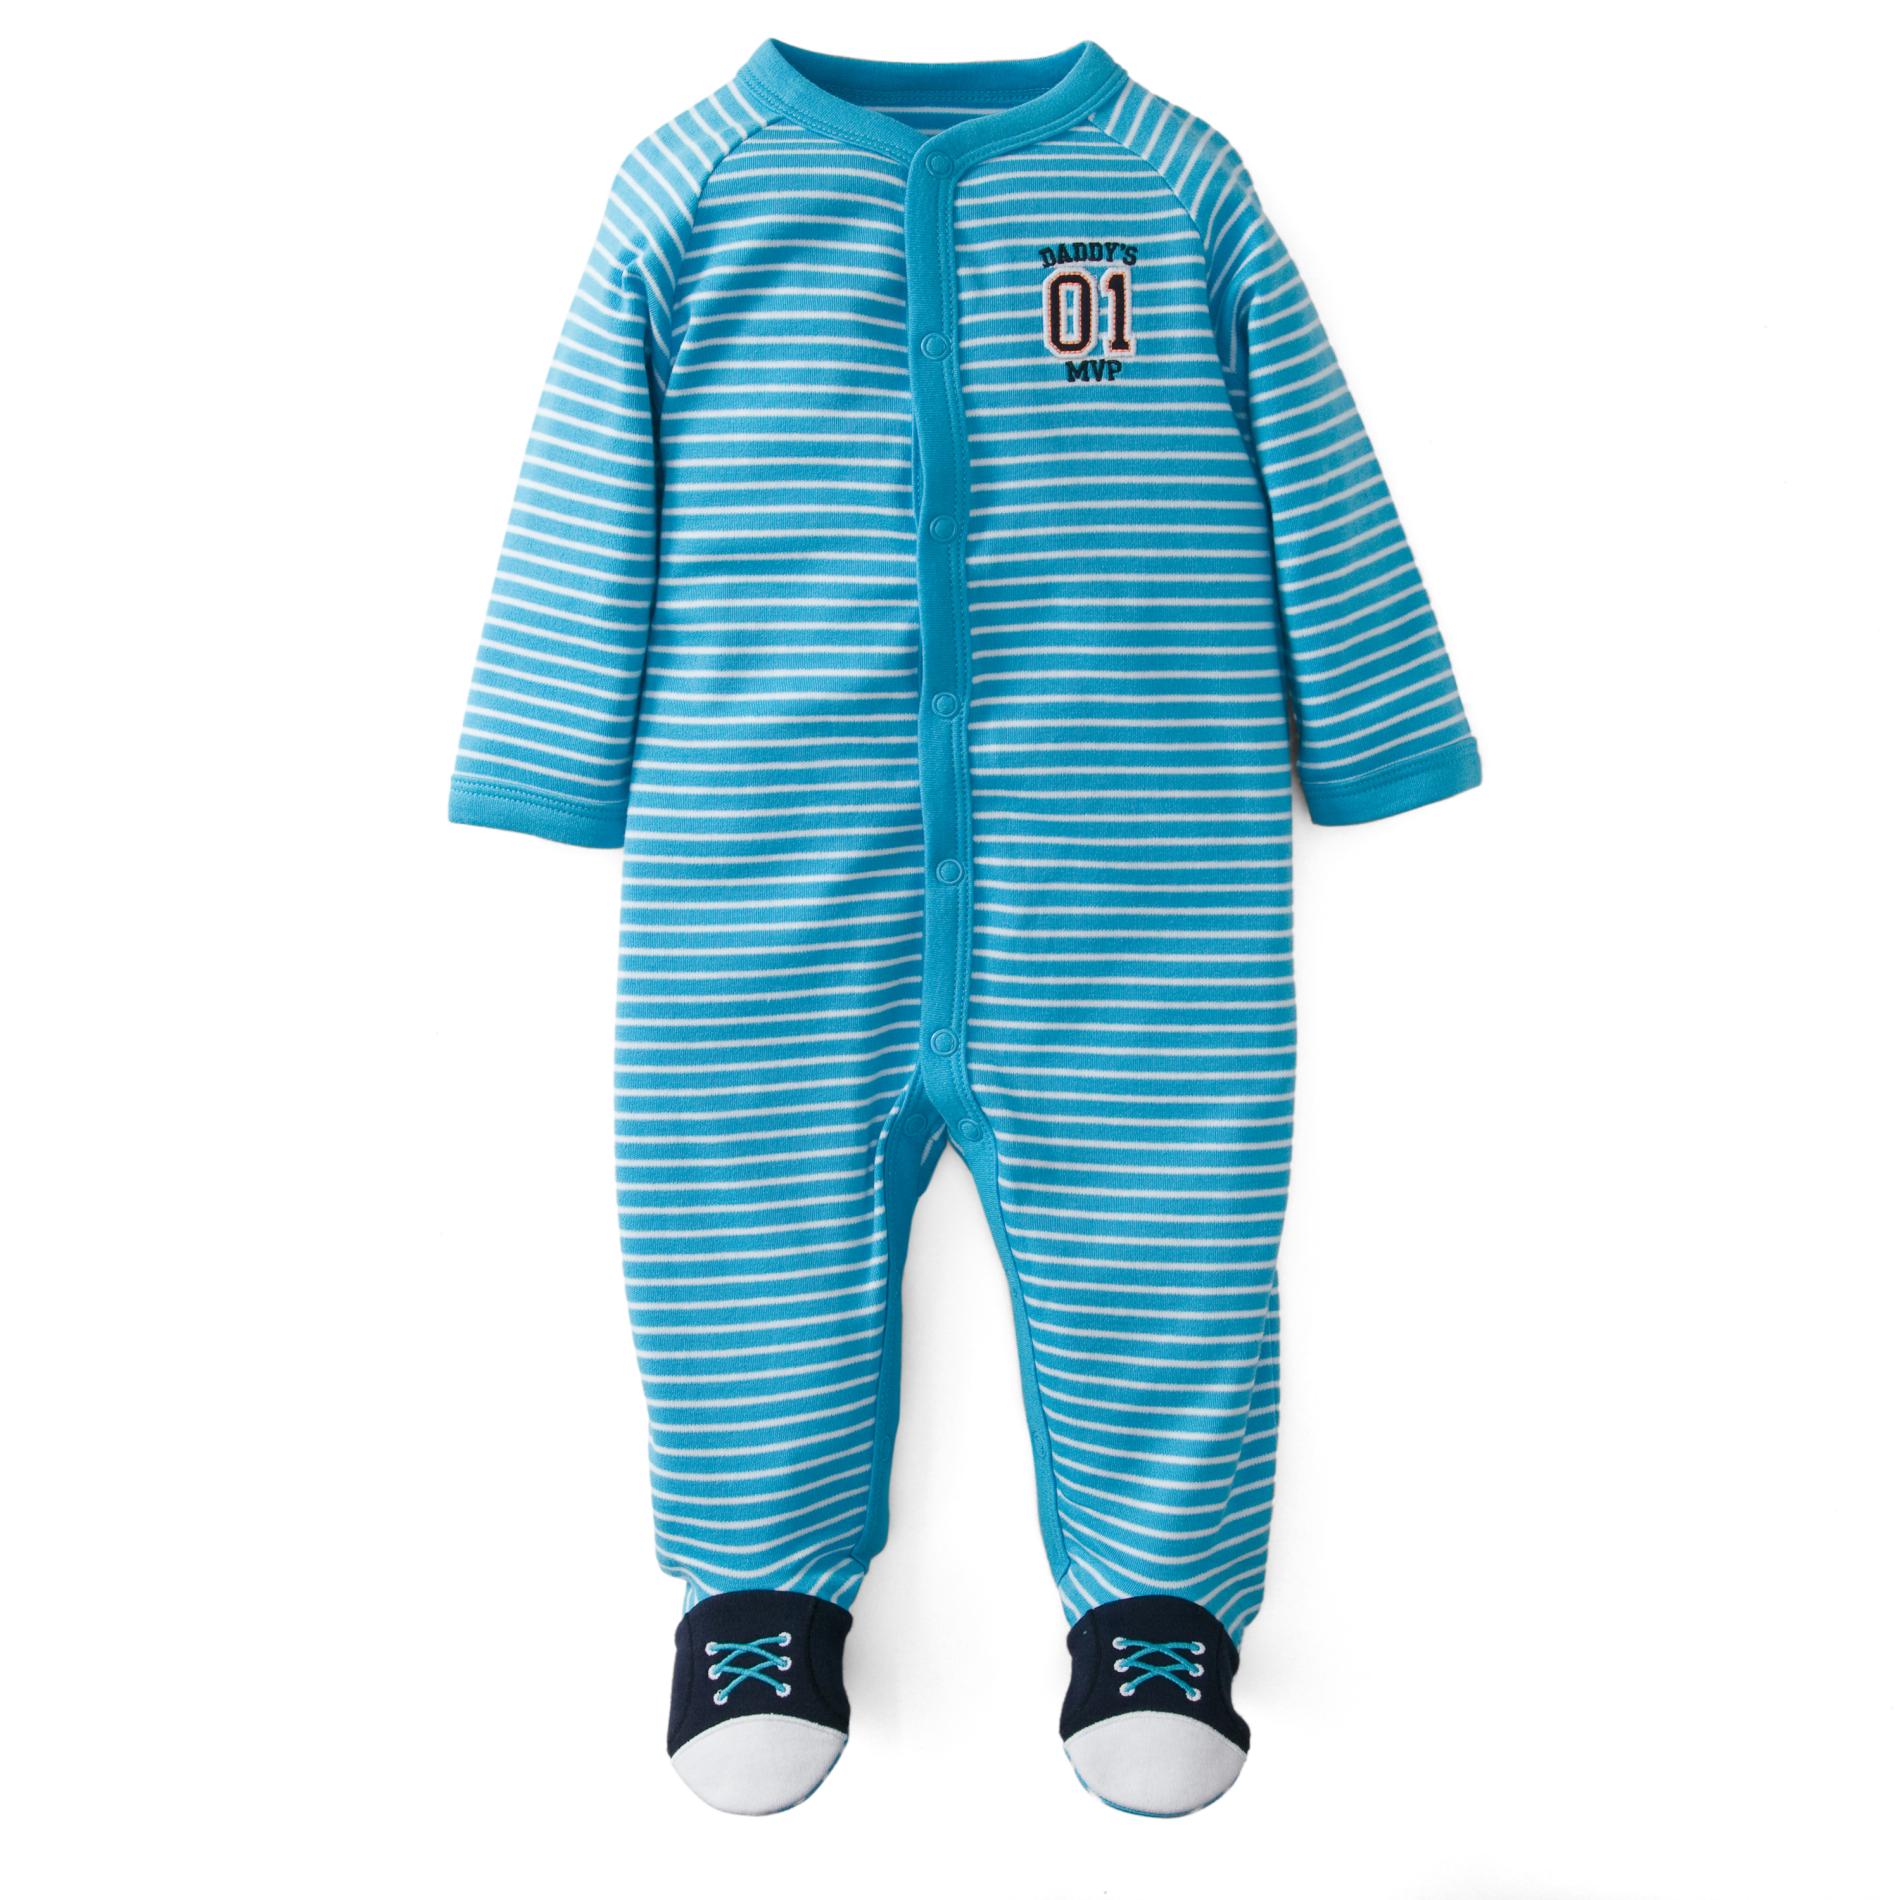 Carter's Newborn Boy's Footed Pajamas - Sport